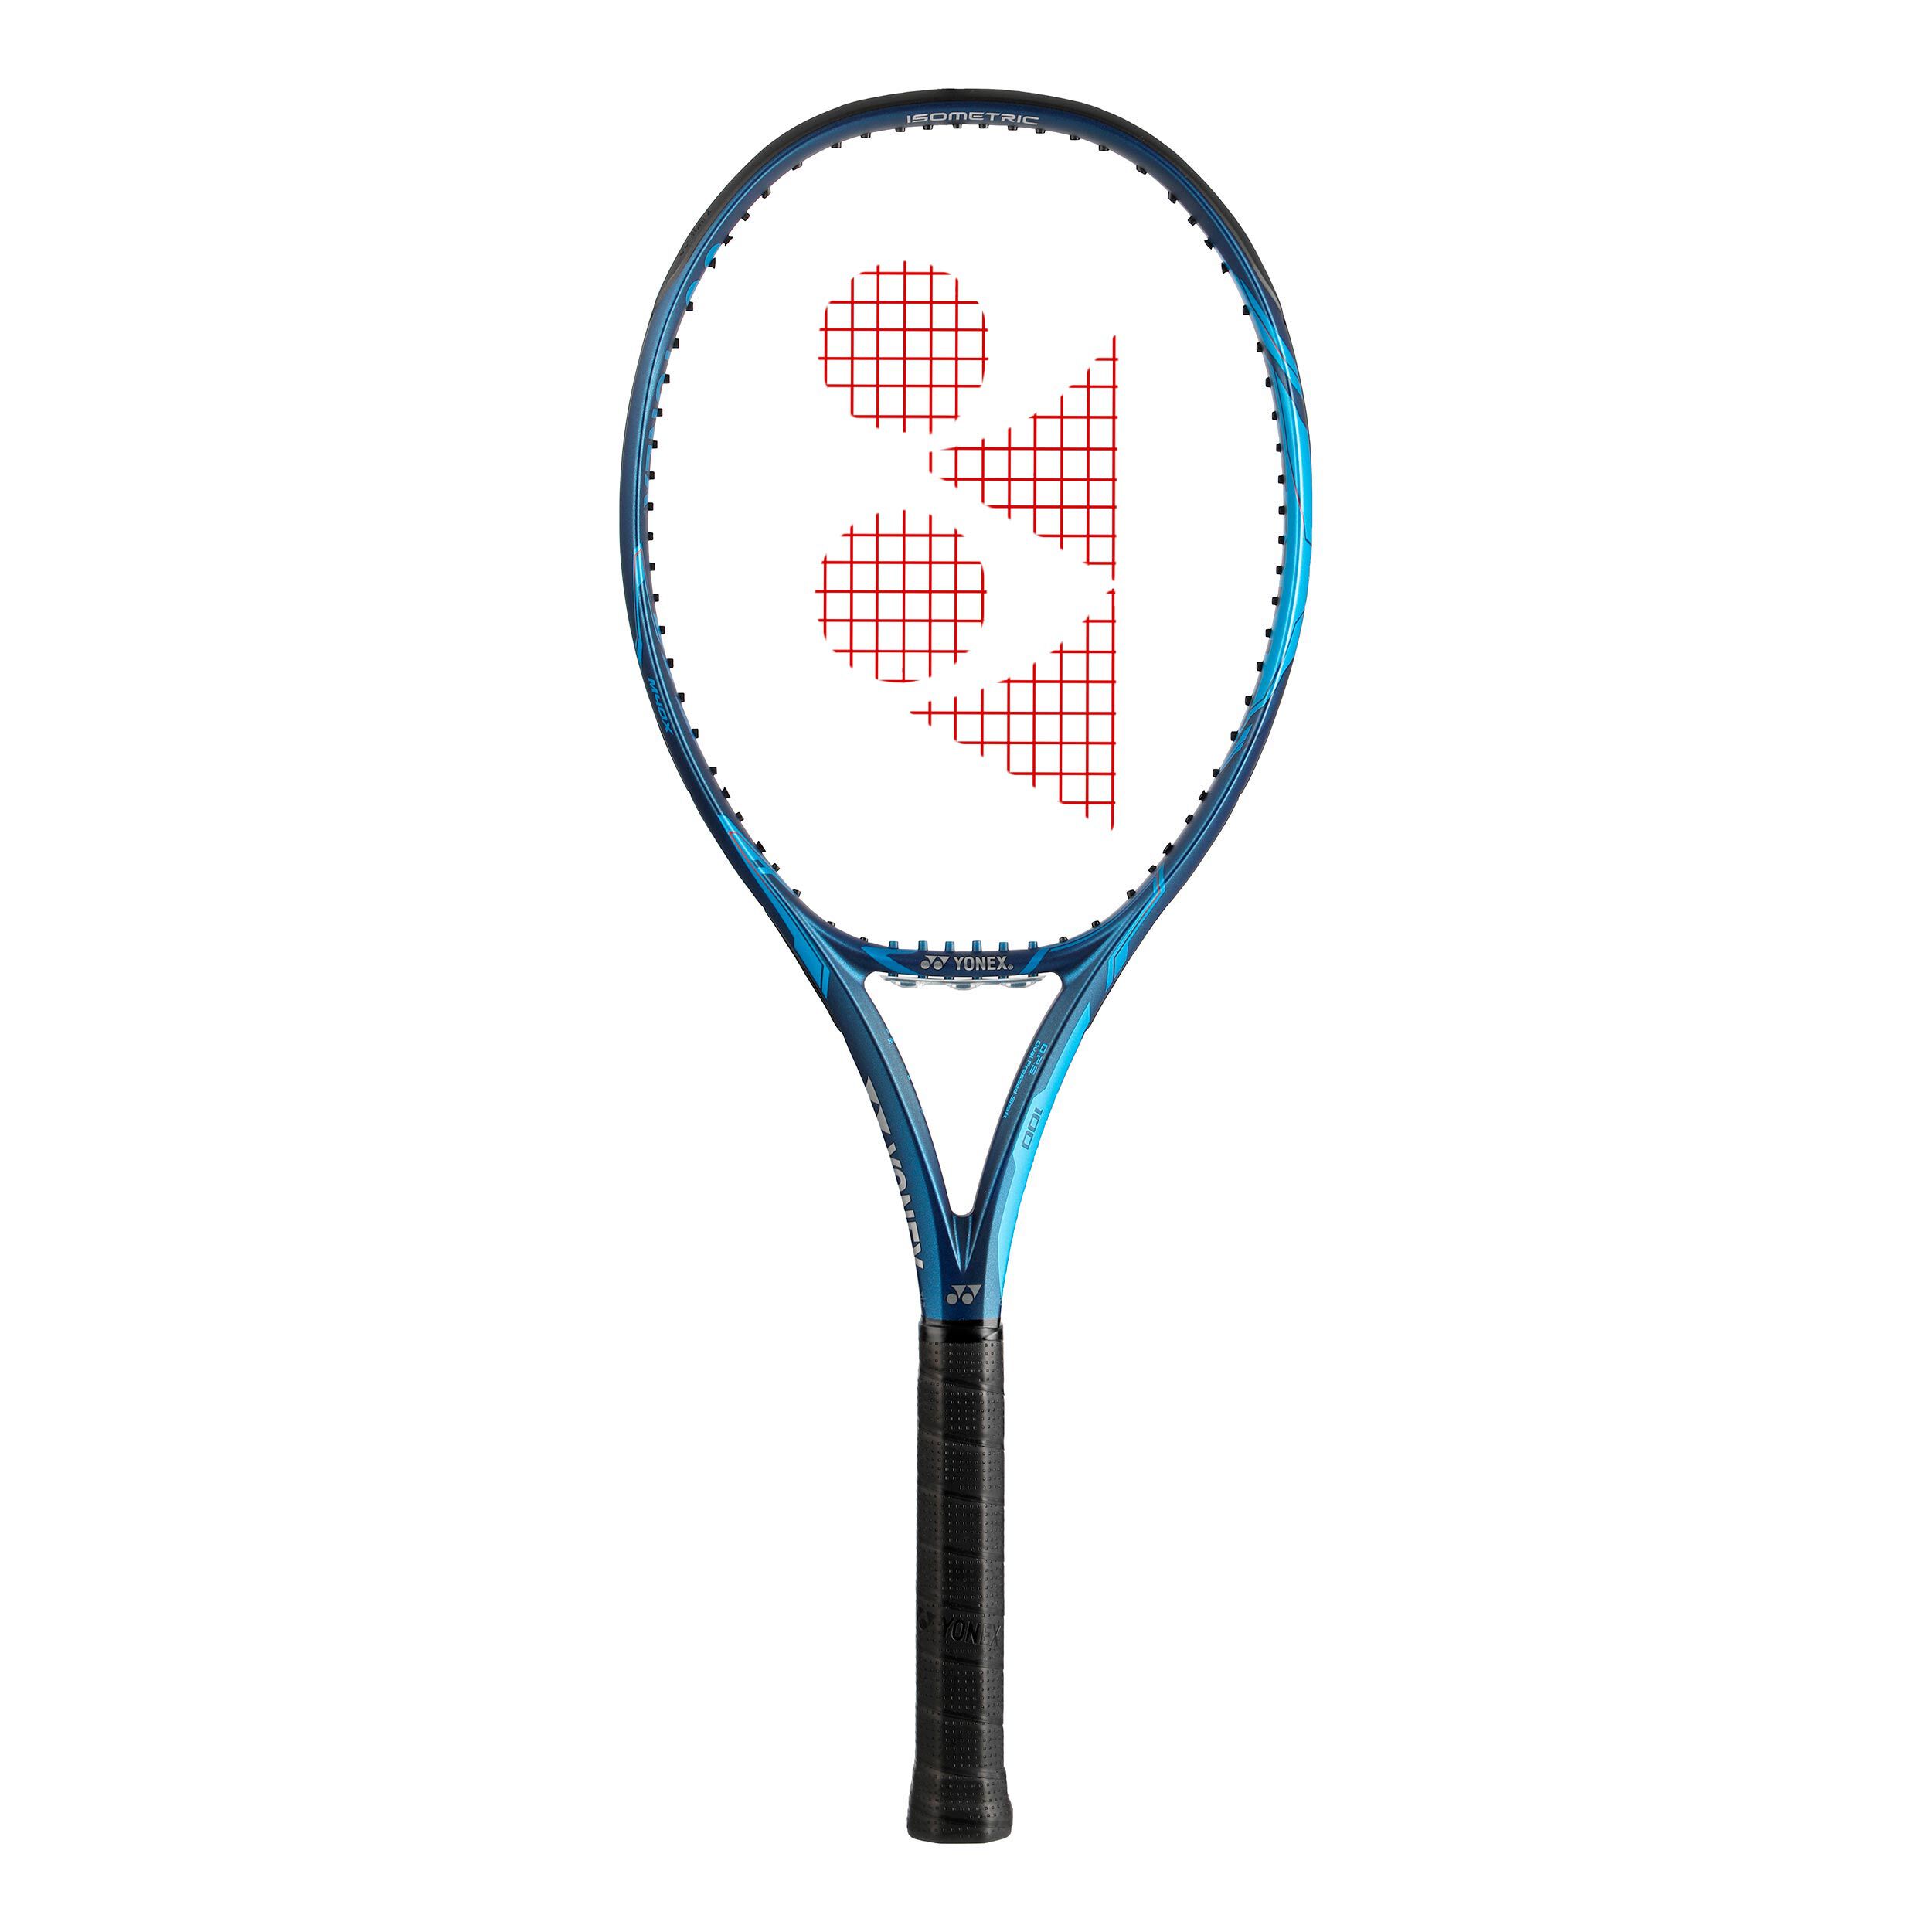 Speed Pro raqueta de tenis unbesaitet nuevo PVP 270,00 € Head graphene 360 